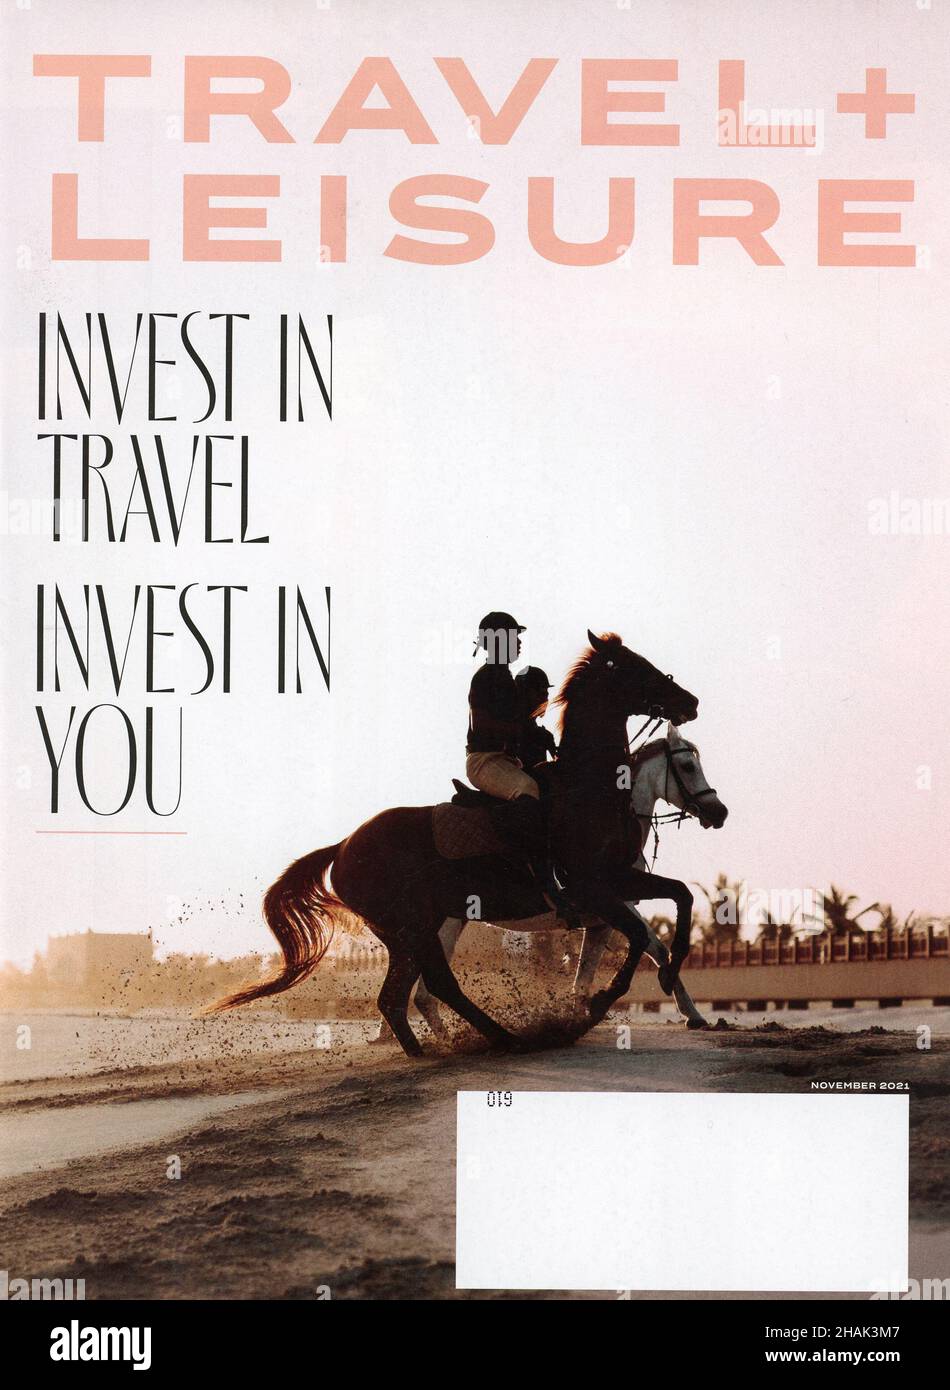 Cover des Travel+Leisure Magazins November 2021, USA Stockfoto